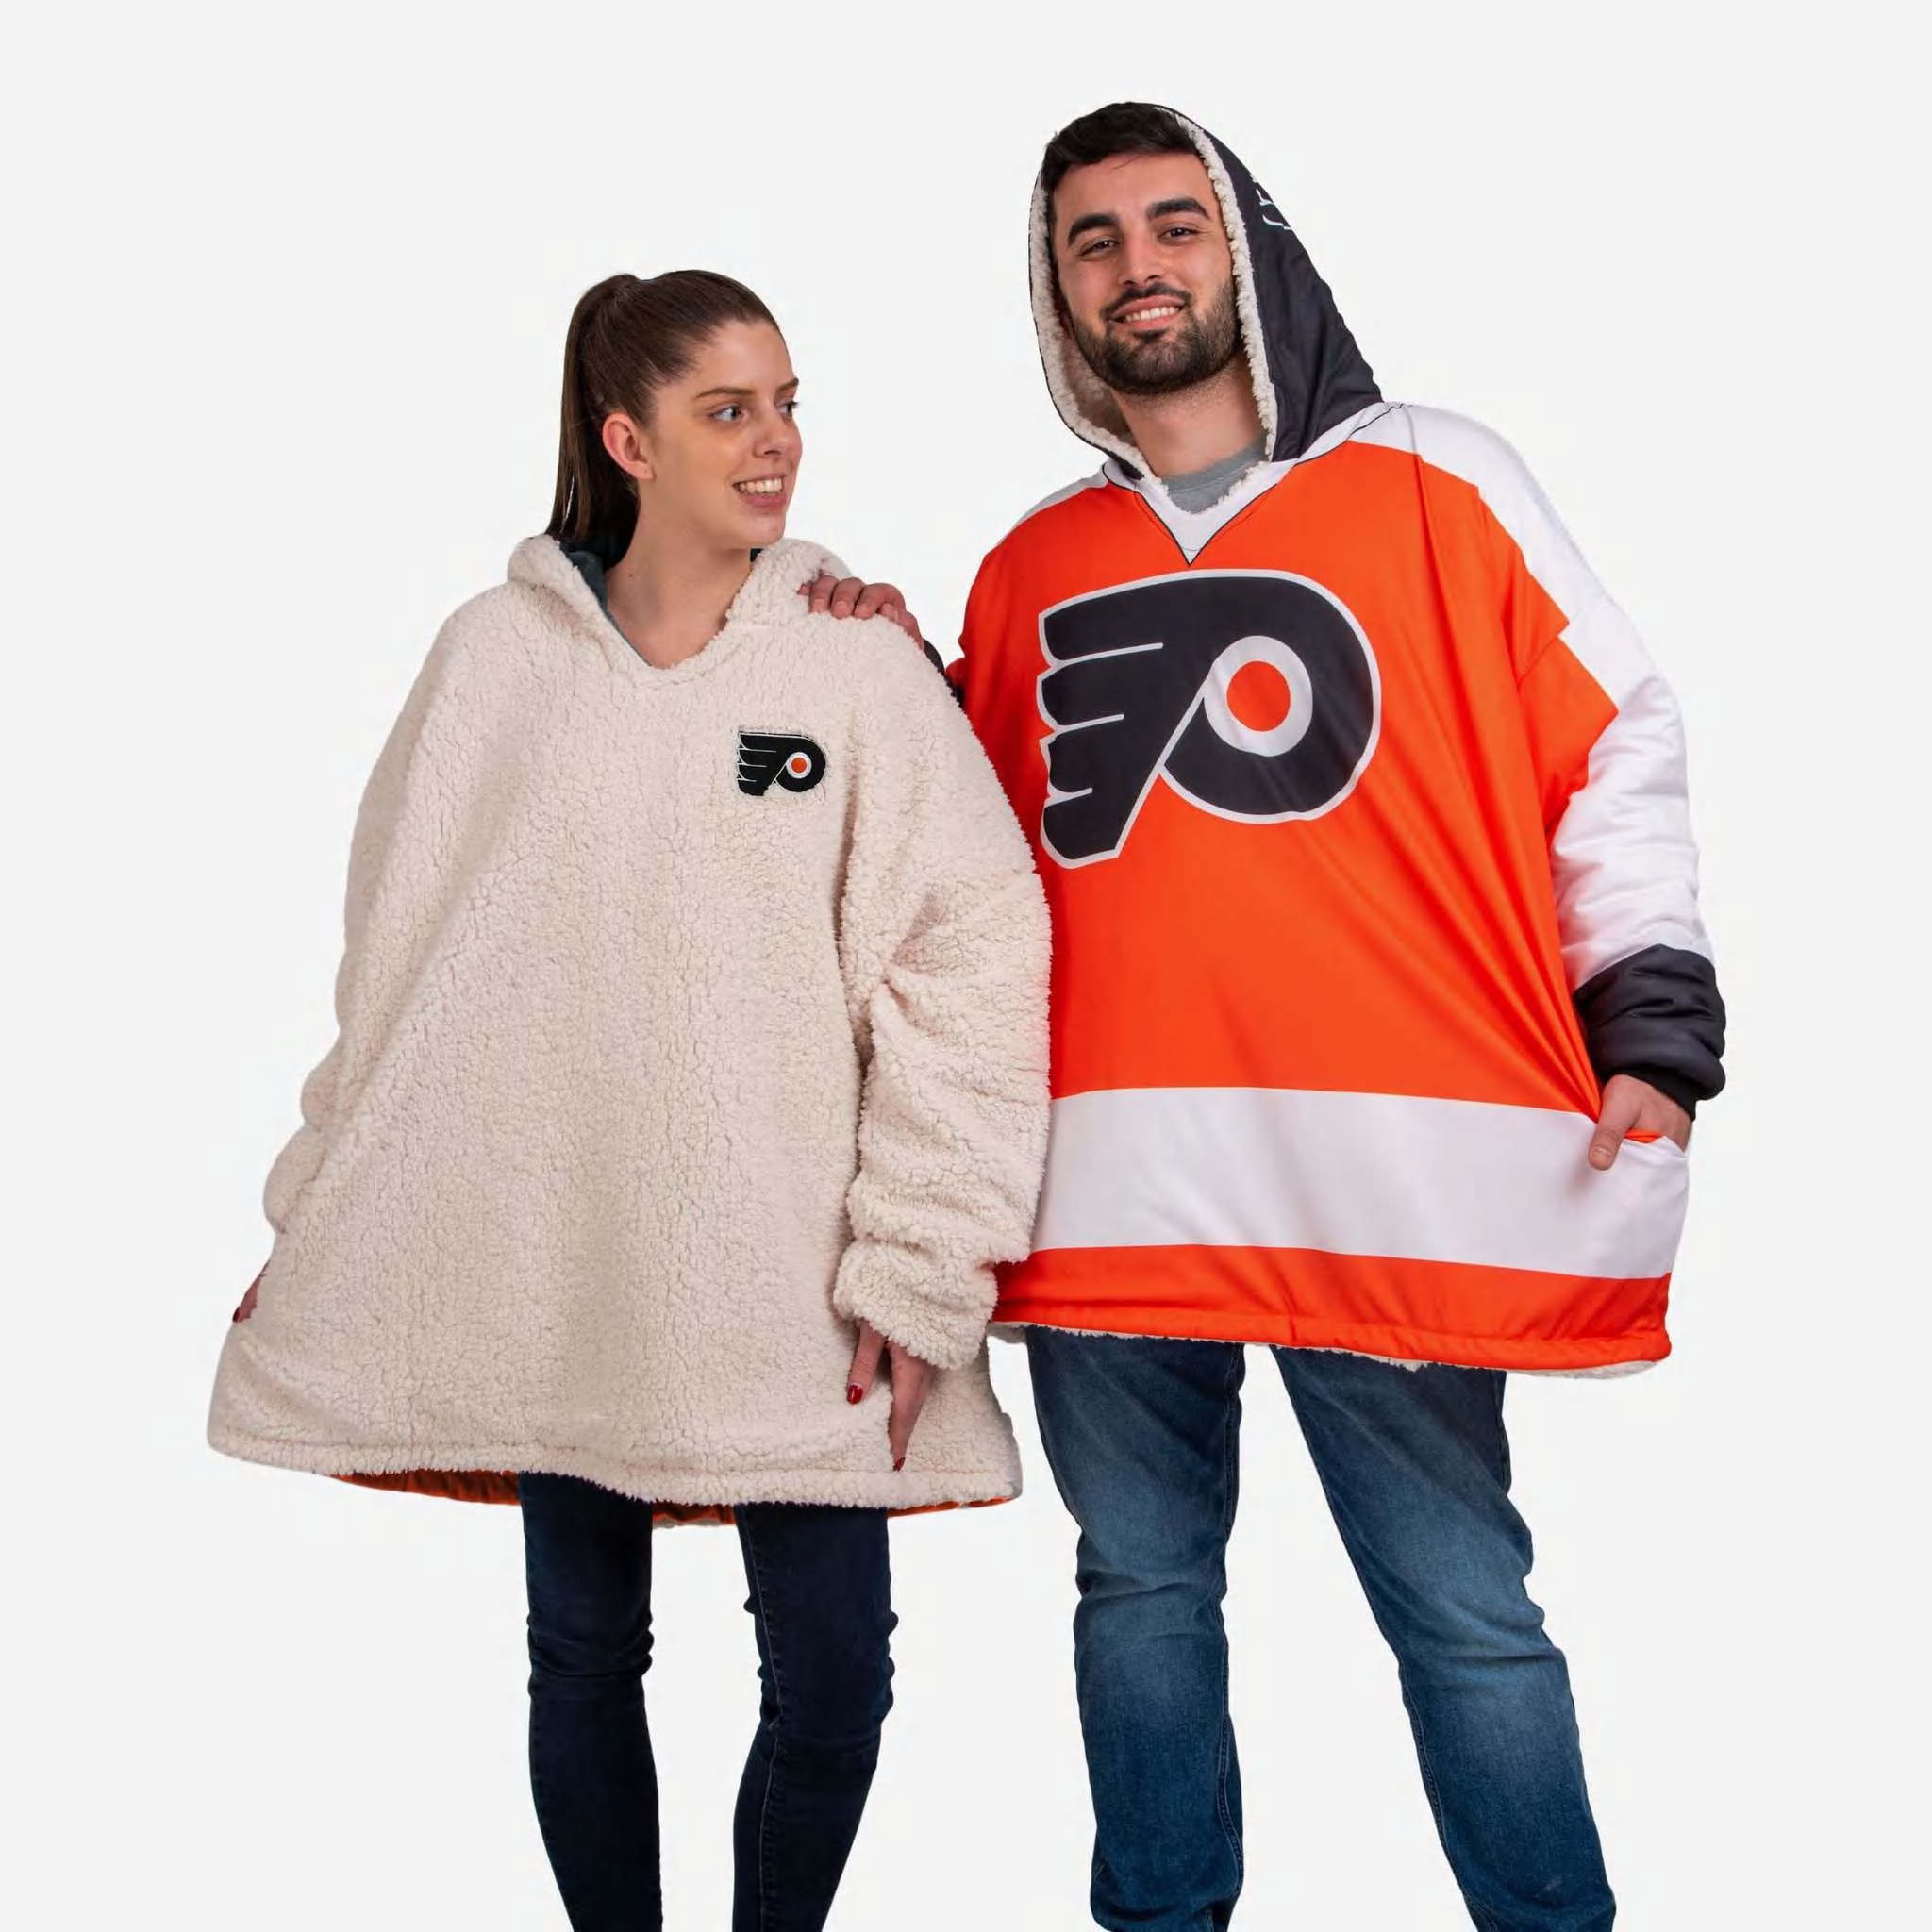 SALE: Save 15% on Philadelphia Flyers items at FOCO